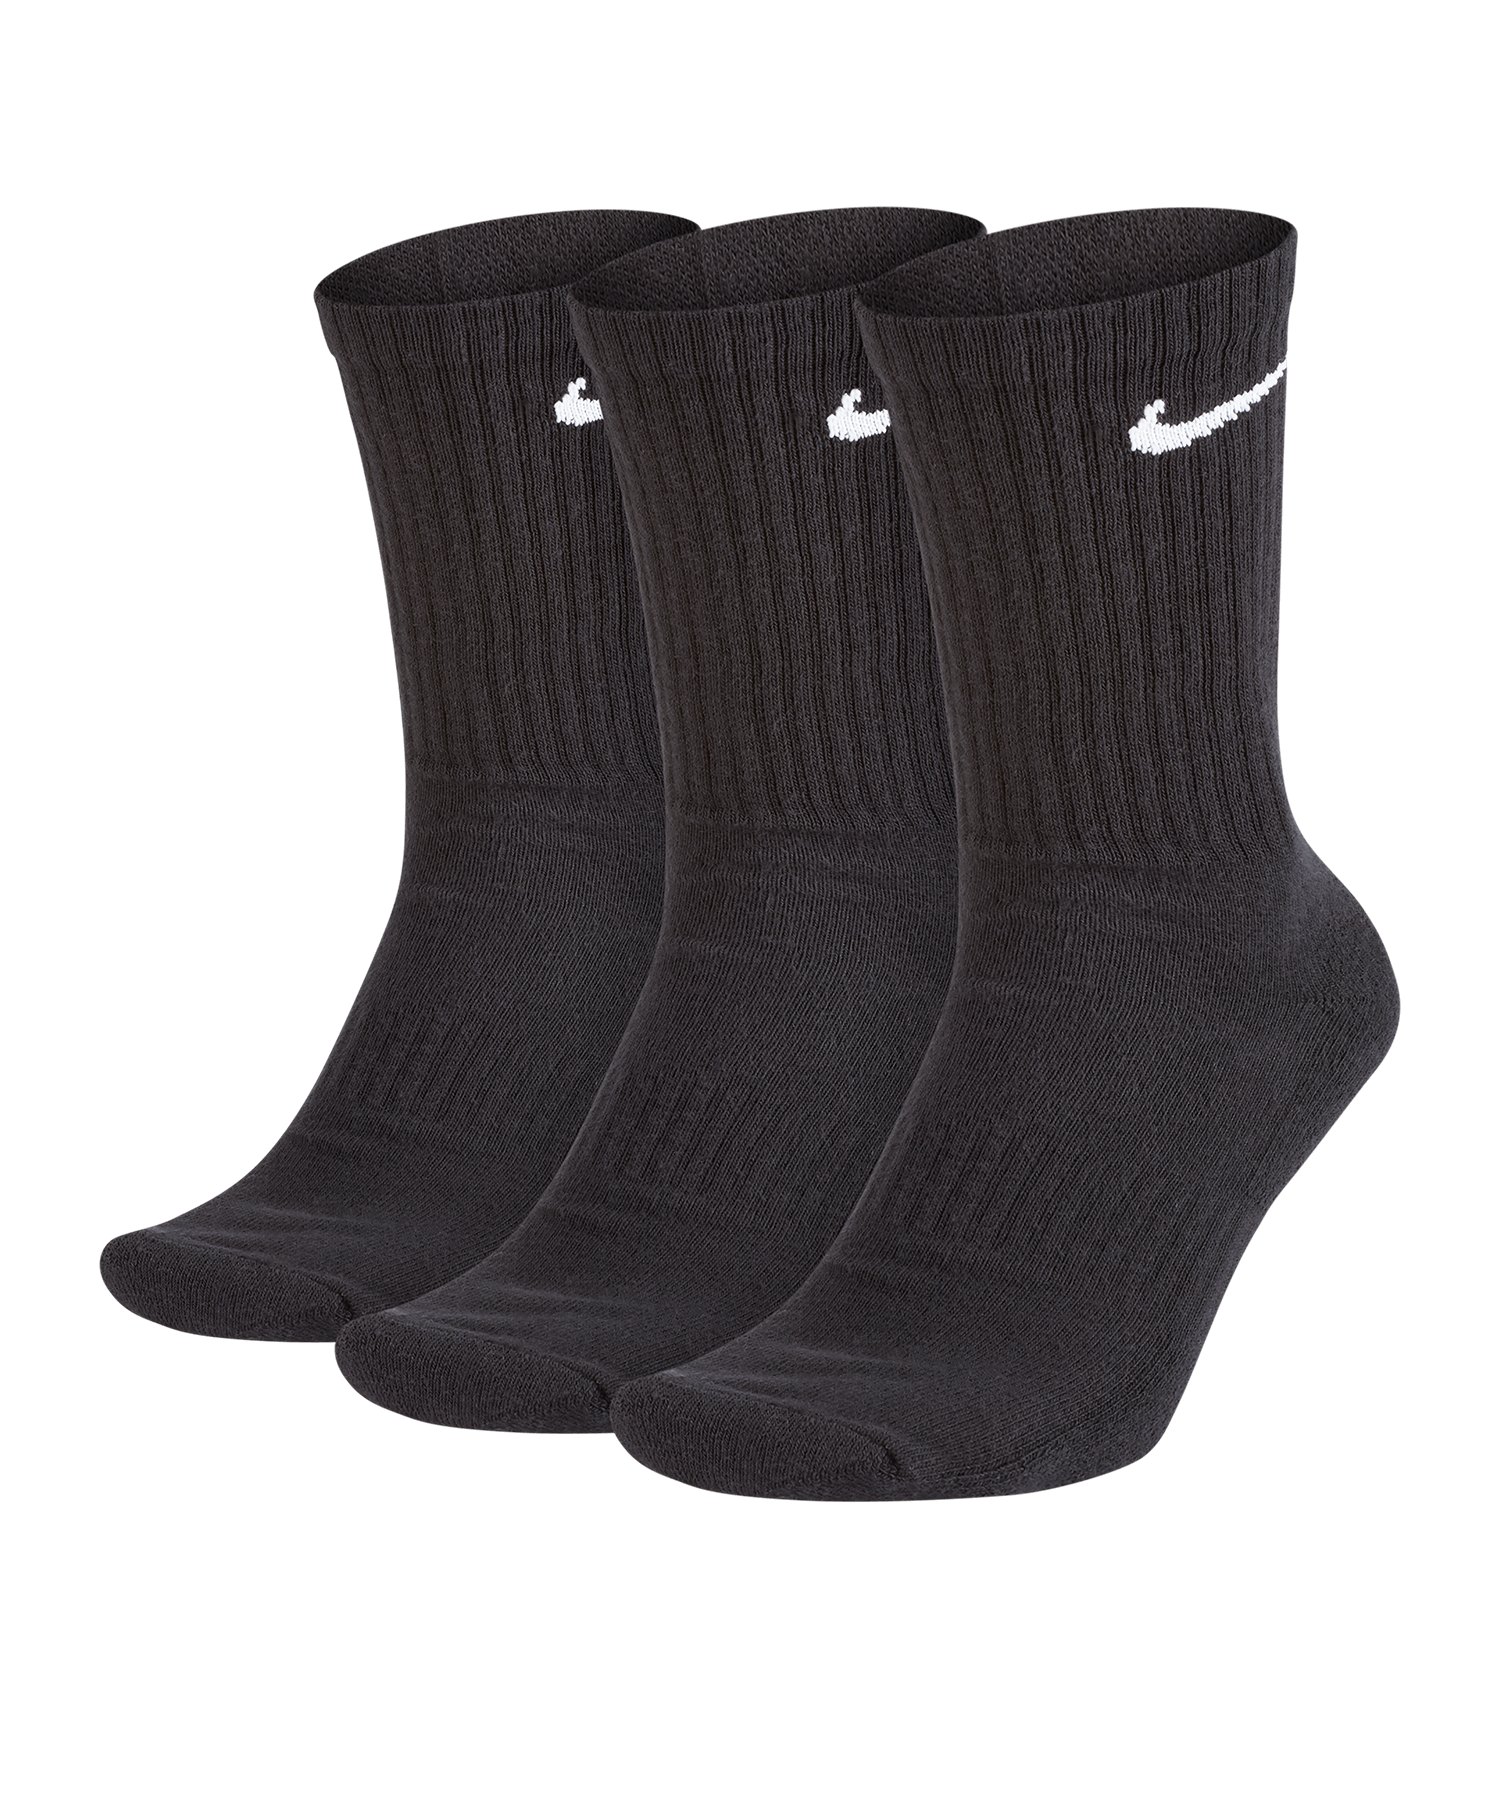 Nike Everyday Cushion Crew 3er Pack Socken F010 - schwarz